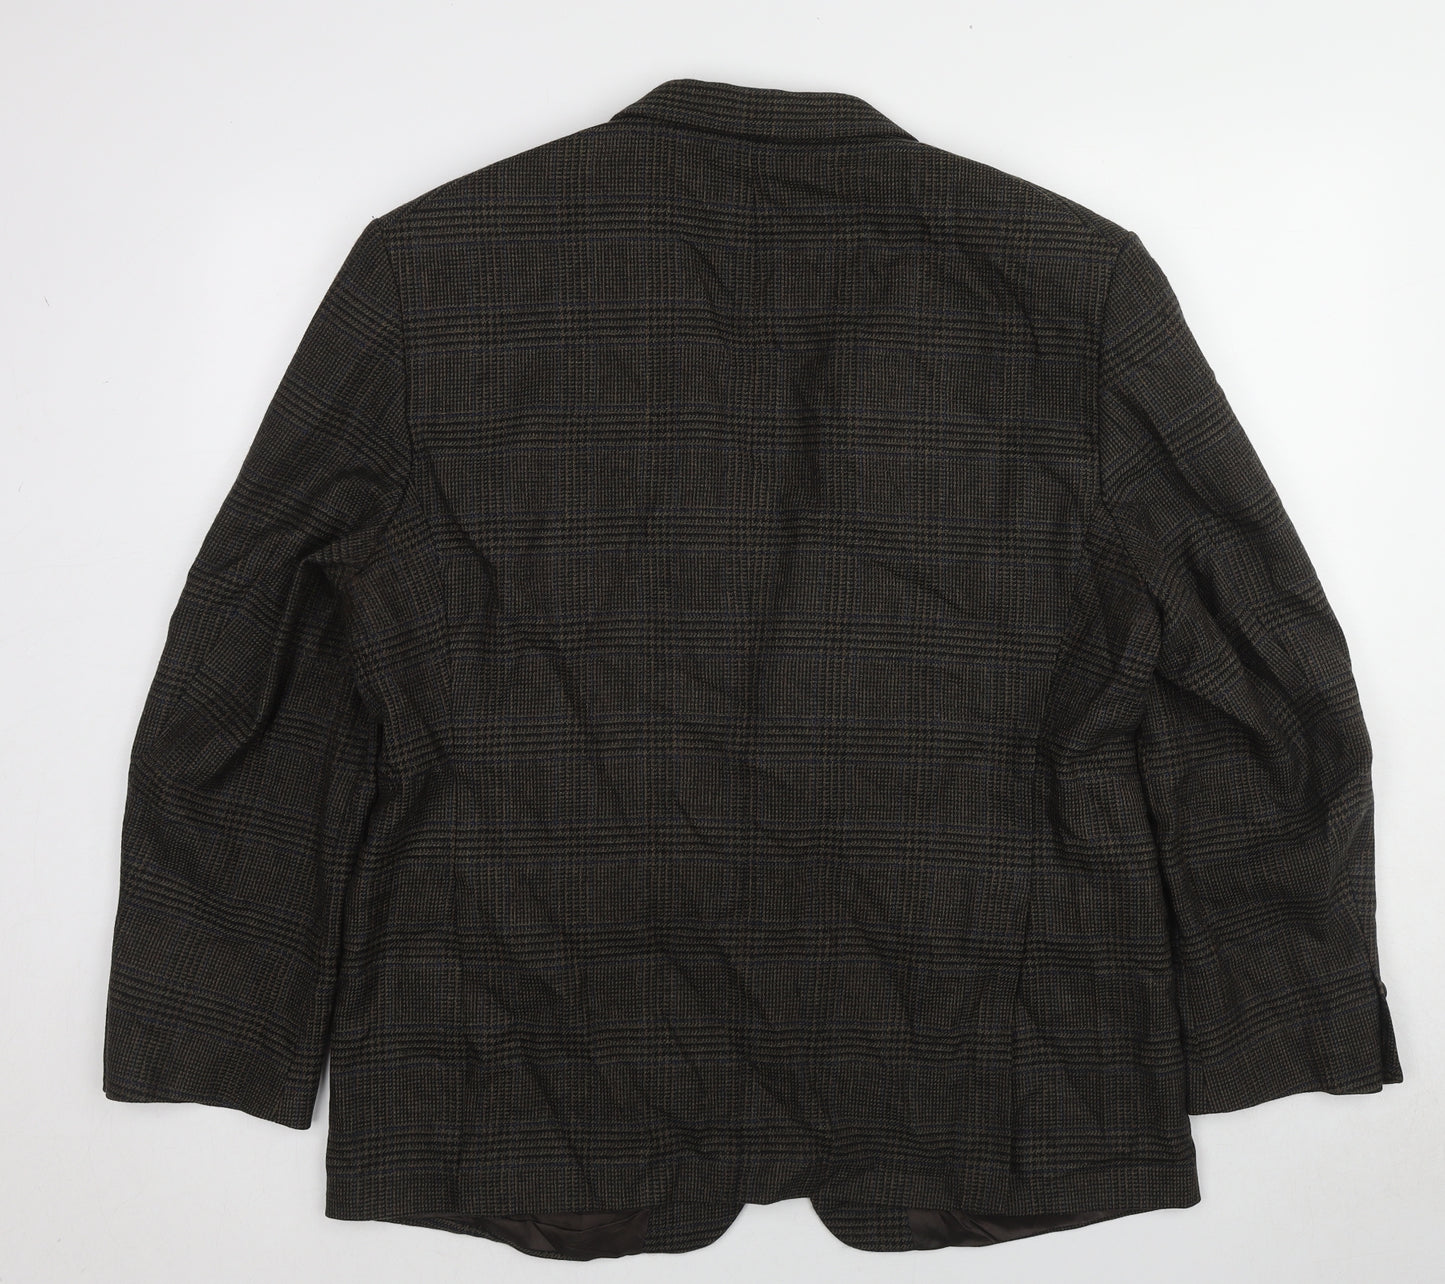 Chatleys Mens Grey Plaid Wool Jacket Suit Jacket Size 44 Regular